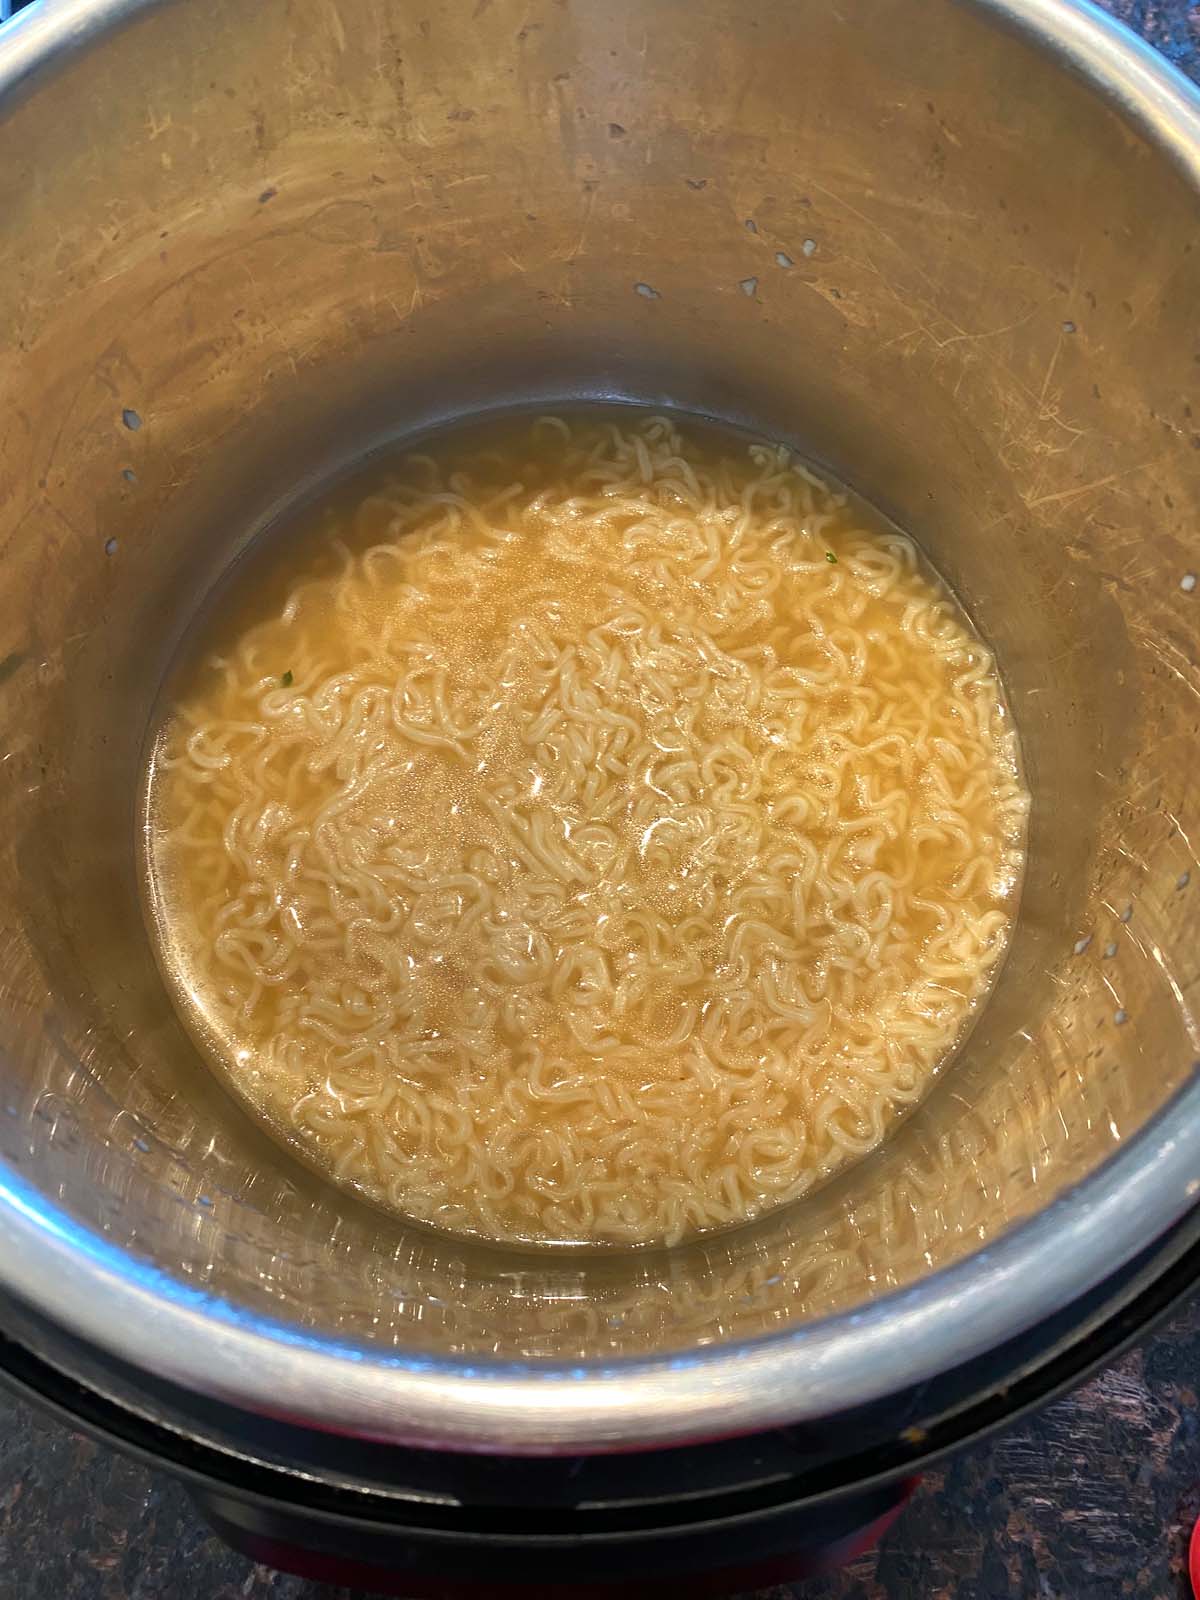 https://www.melaniecooks.com/wp-content/uploads/2021/10/Instant-pot-ramen-noodles-3.jpg